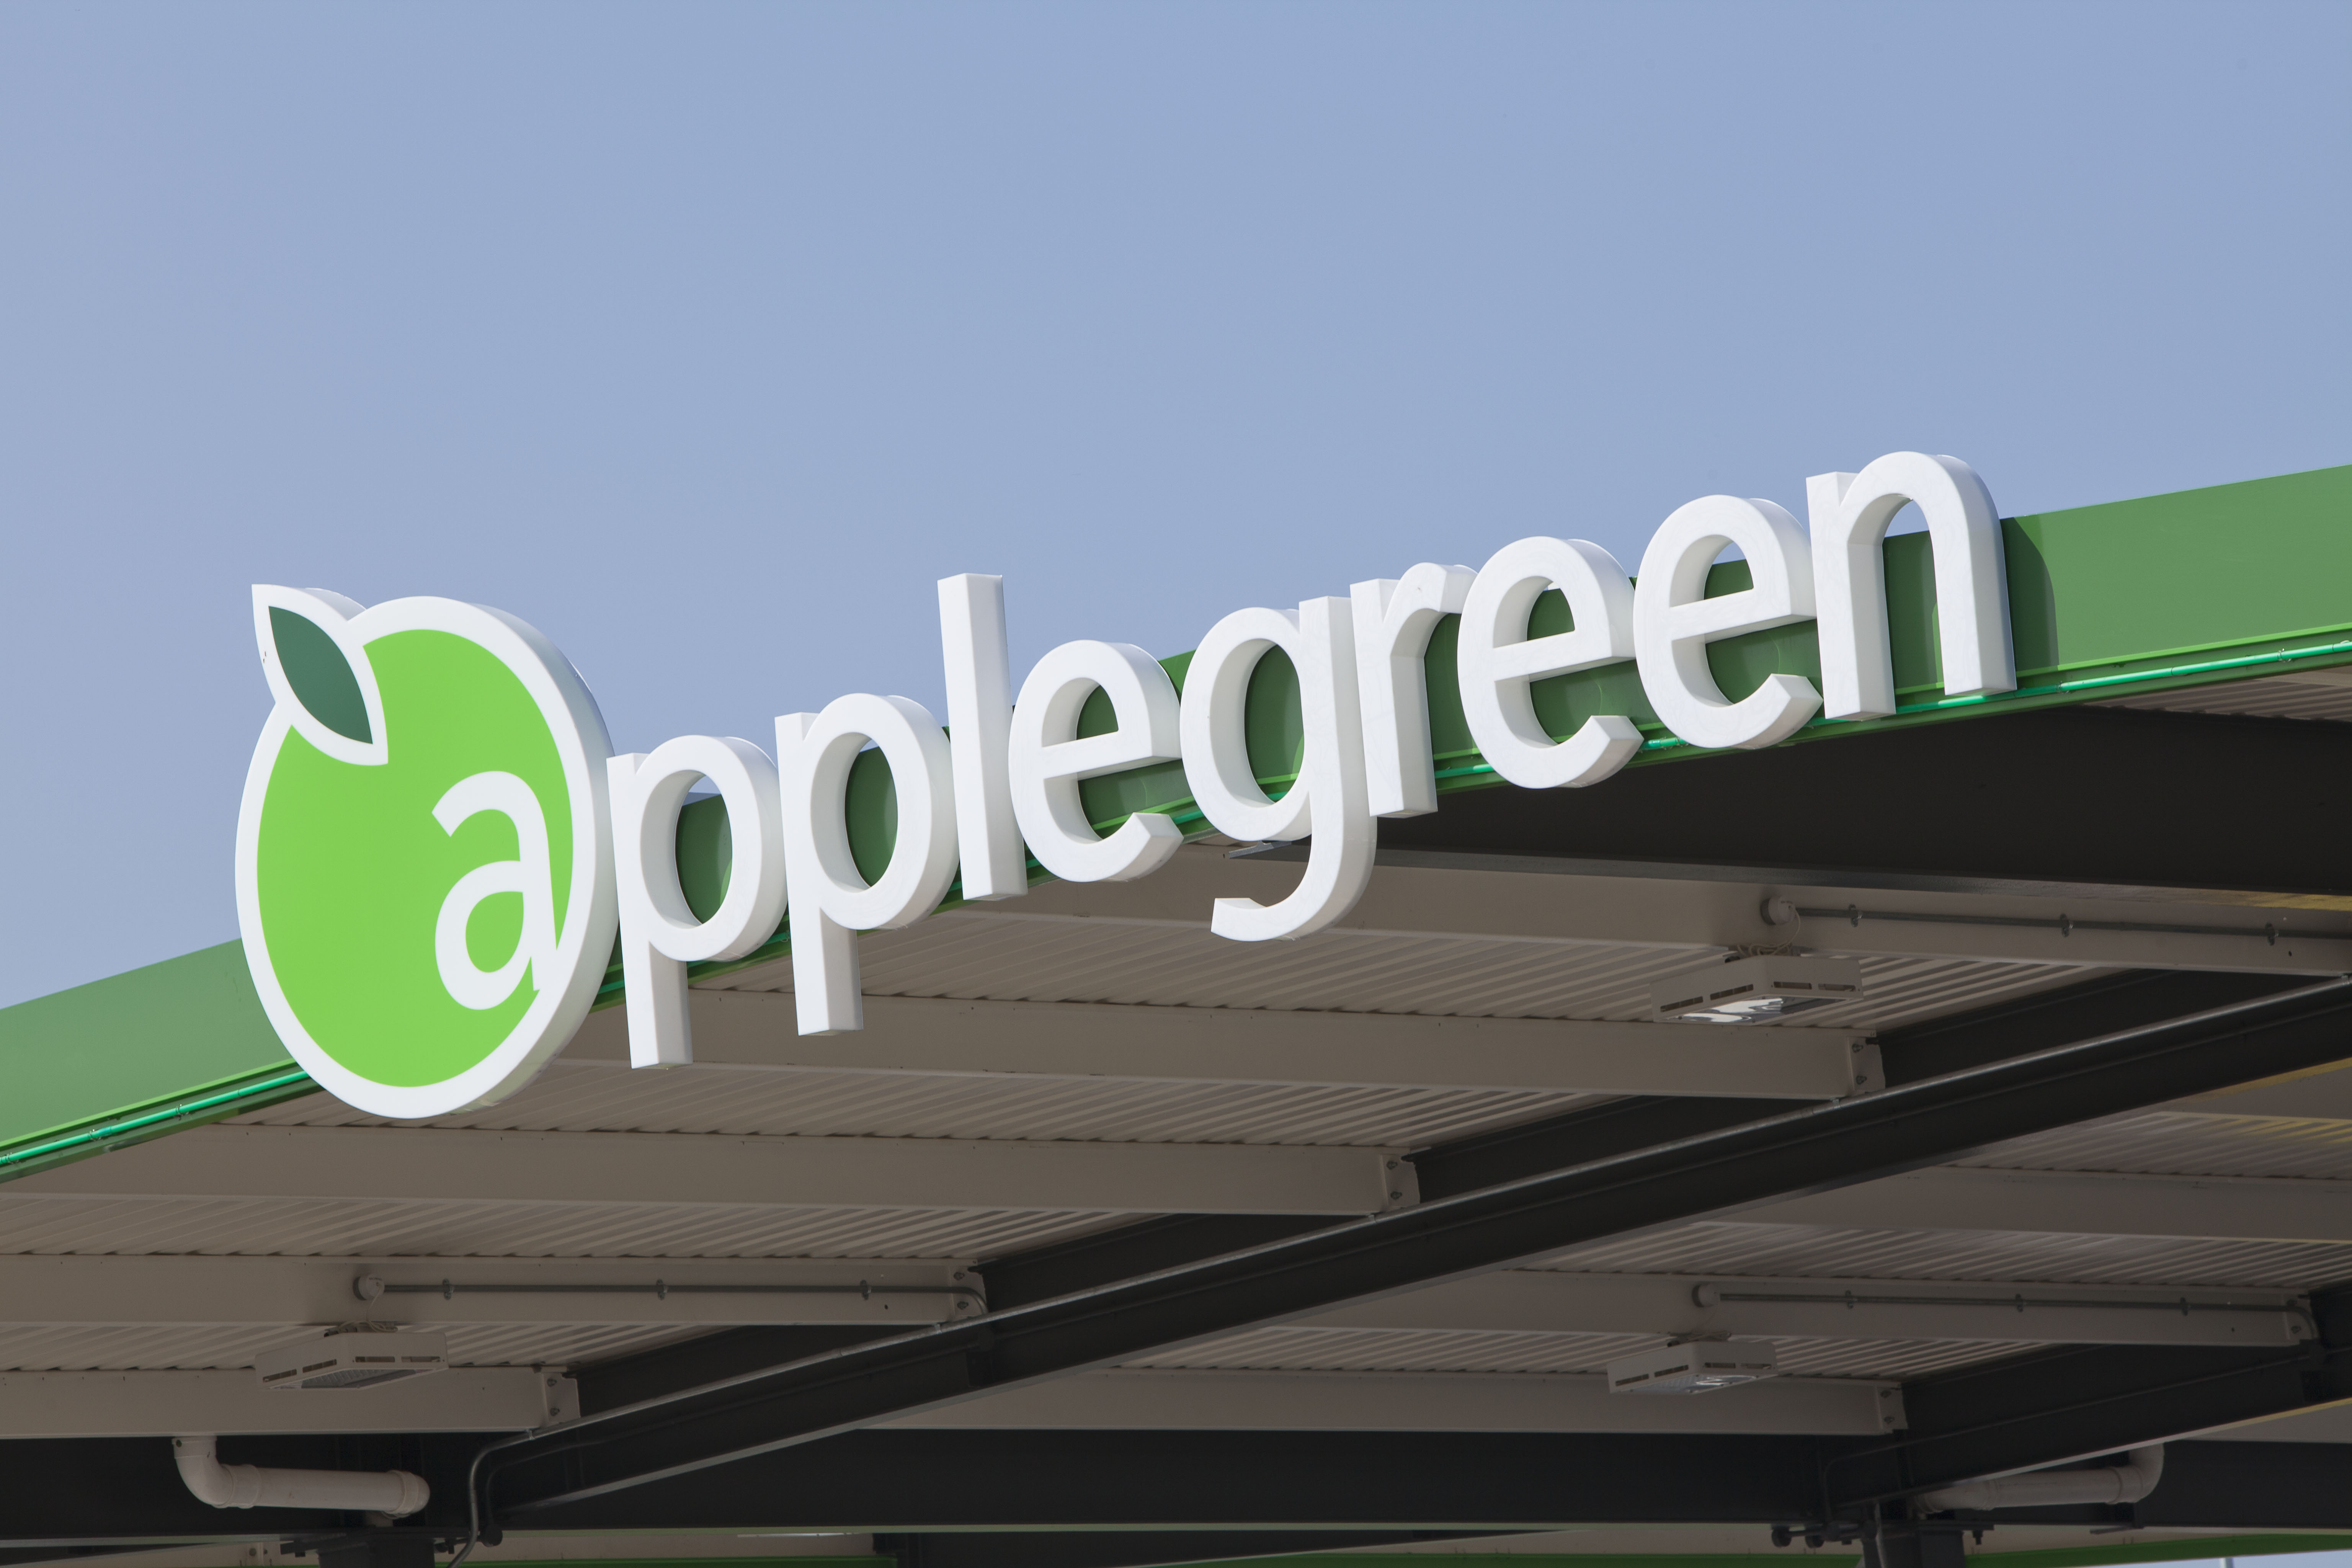 Wellington Green - Apple Store - Apple